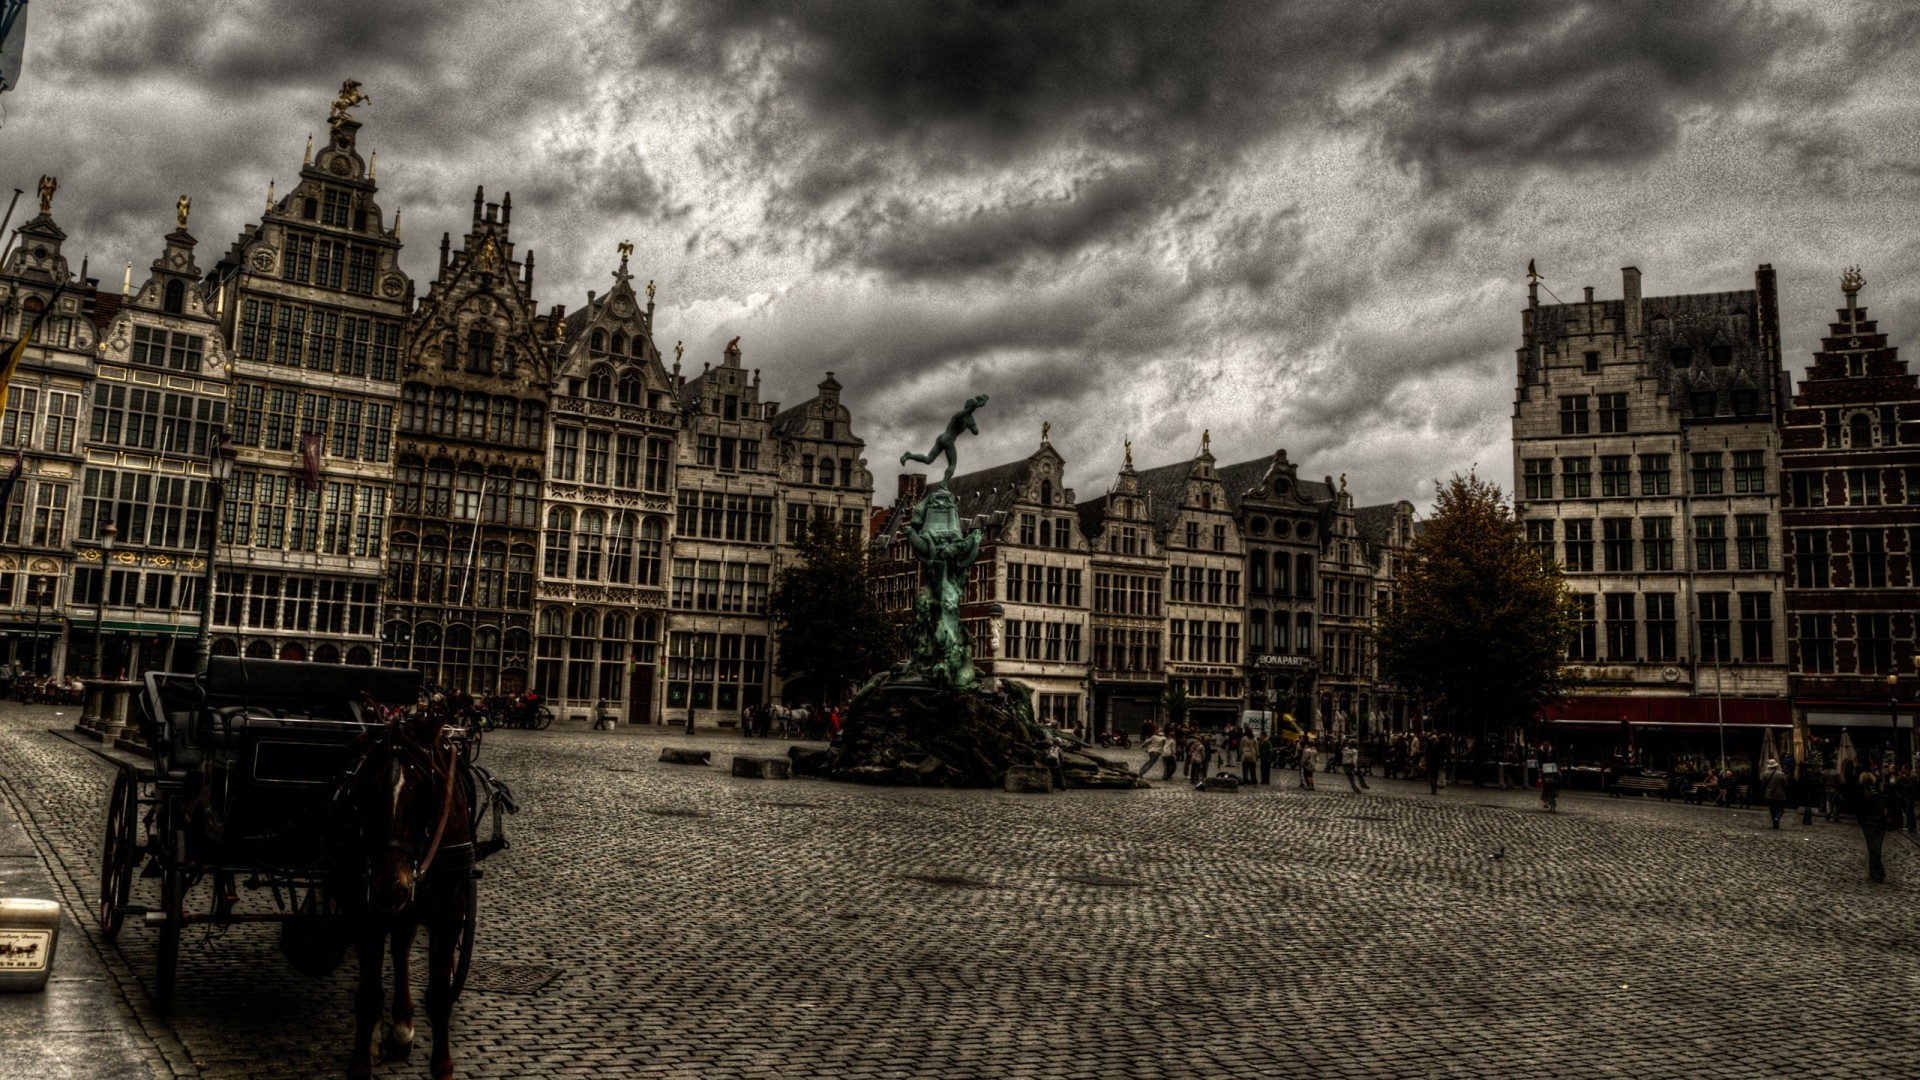 Fountain Statue in the city Square, Antwerp Belgium